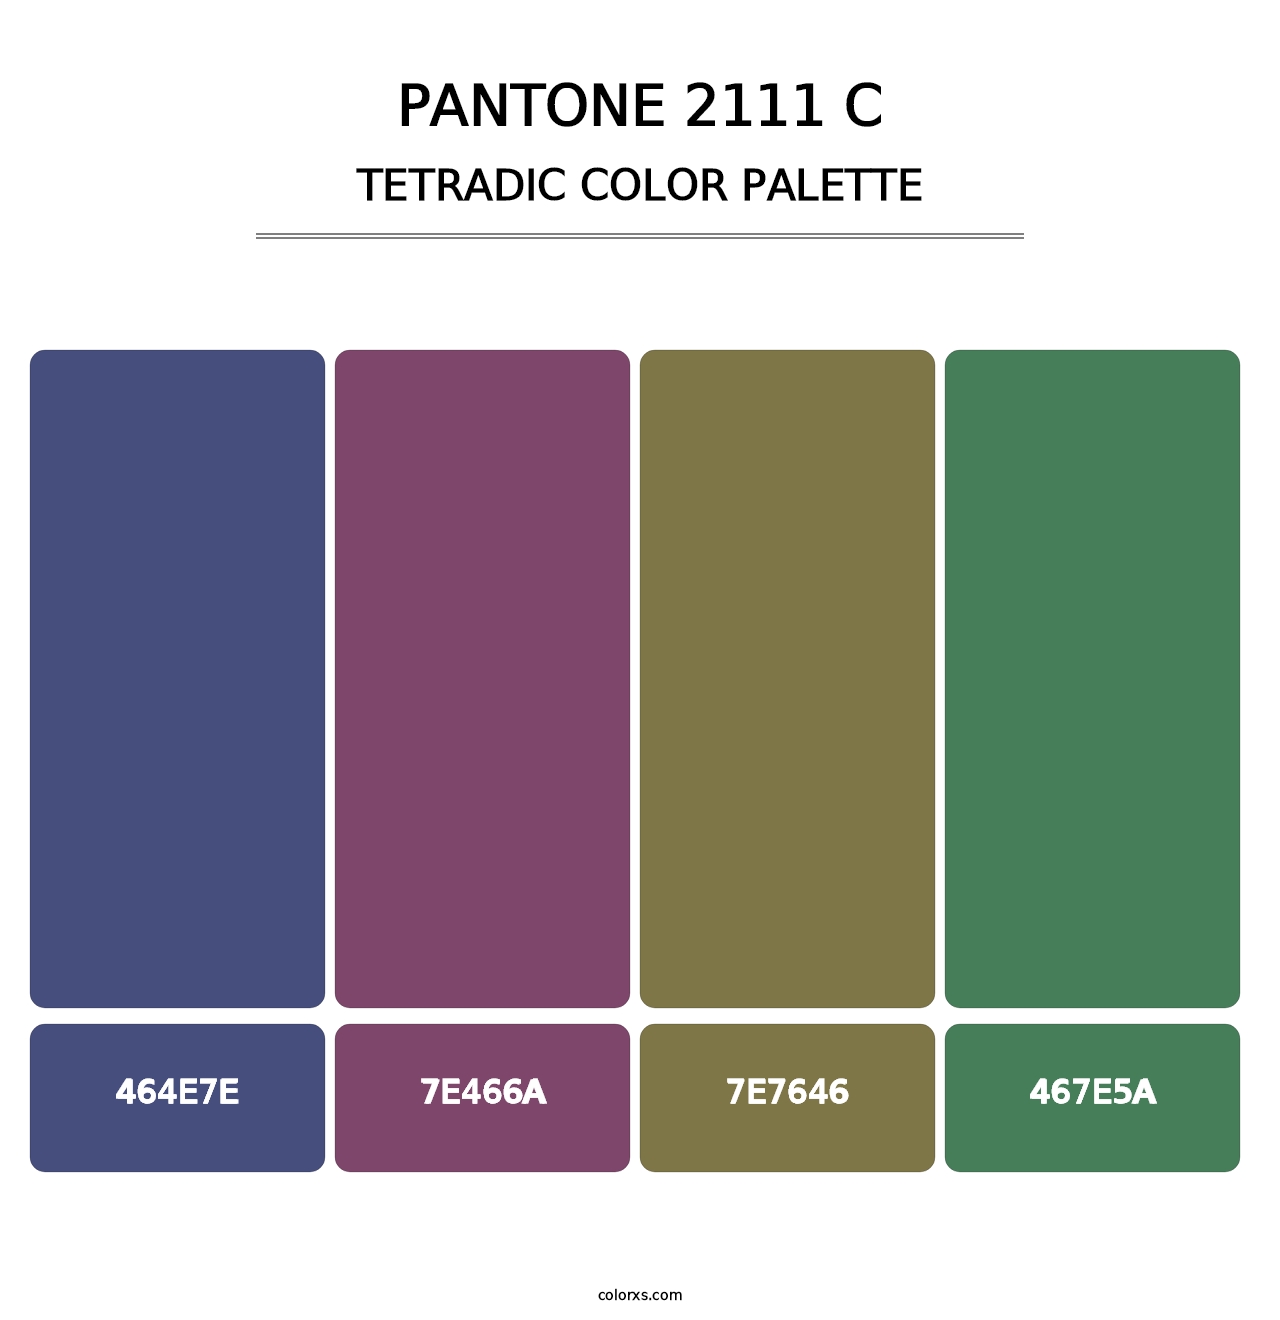 PANTONE 2111 C - Tetradic Color Palette